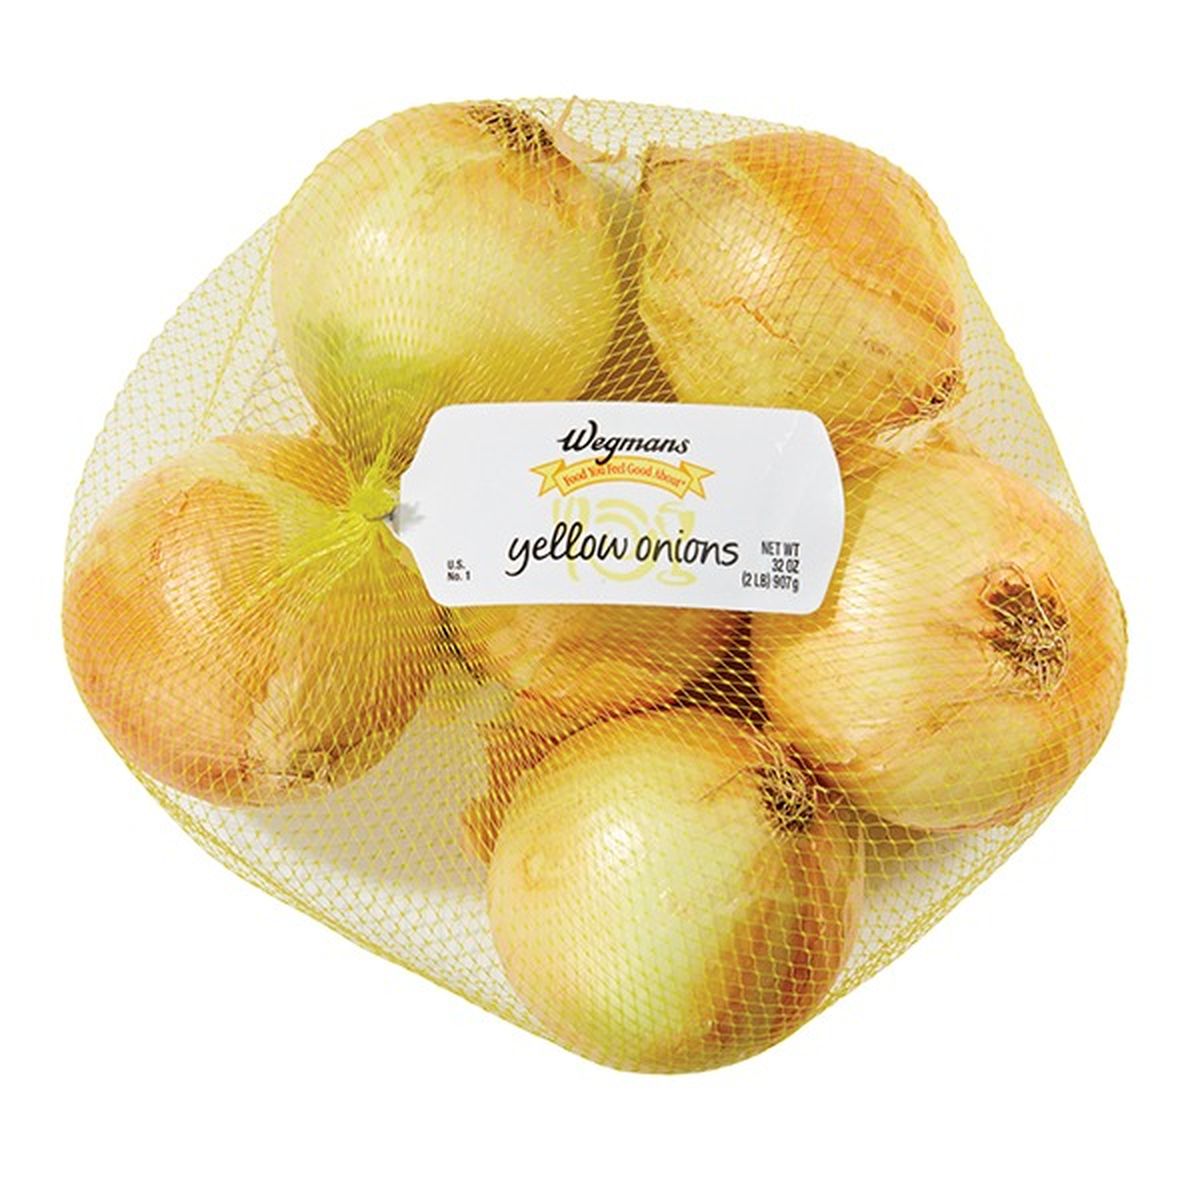 Calories in Wegmans Onions, Yellow